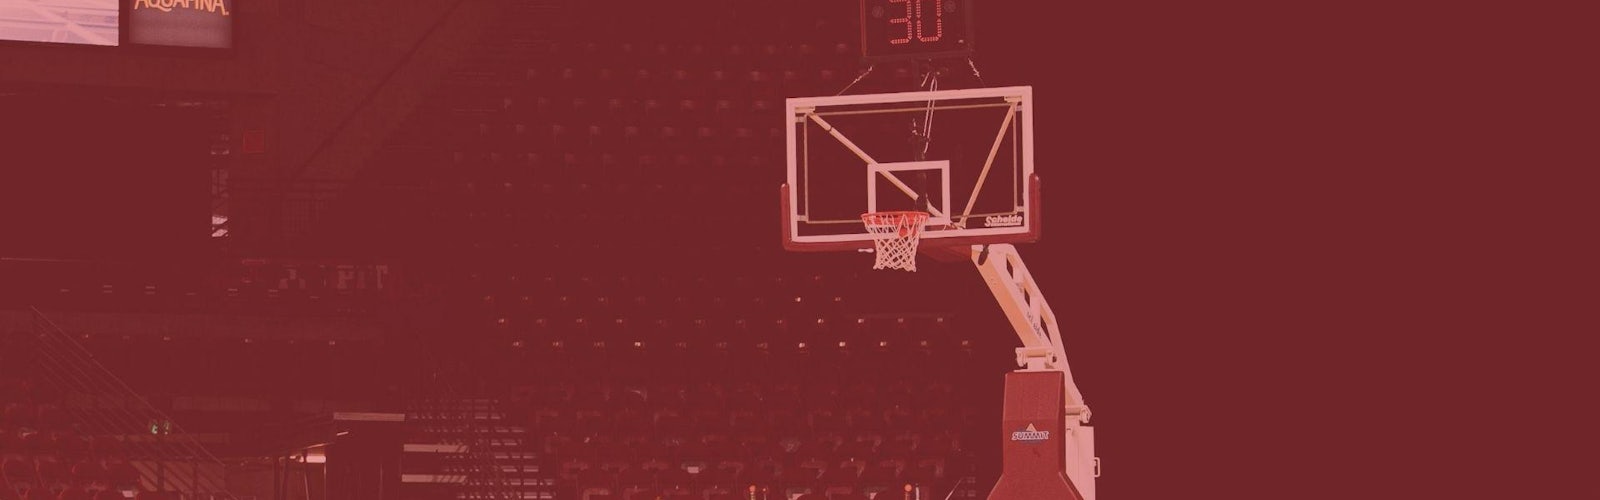 NBA Betting Sites header image